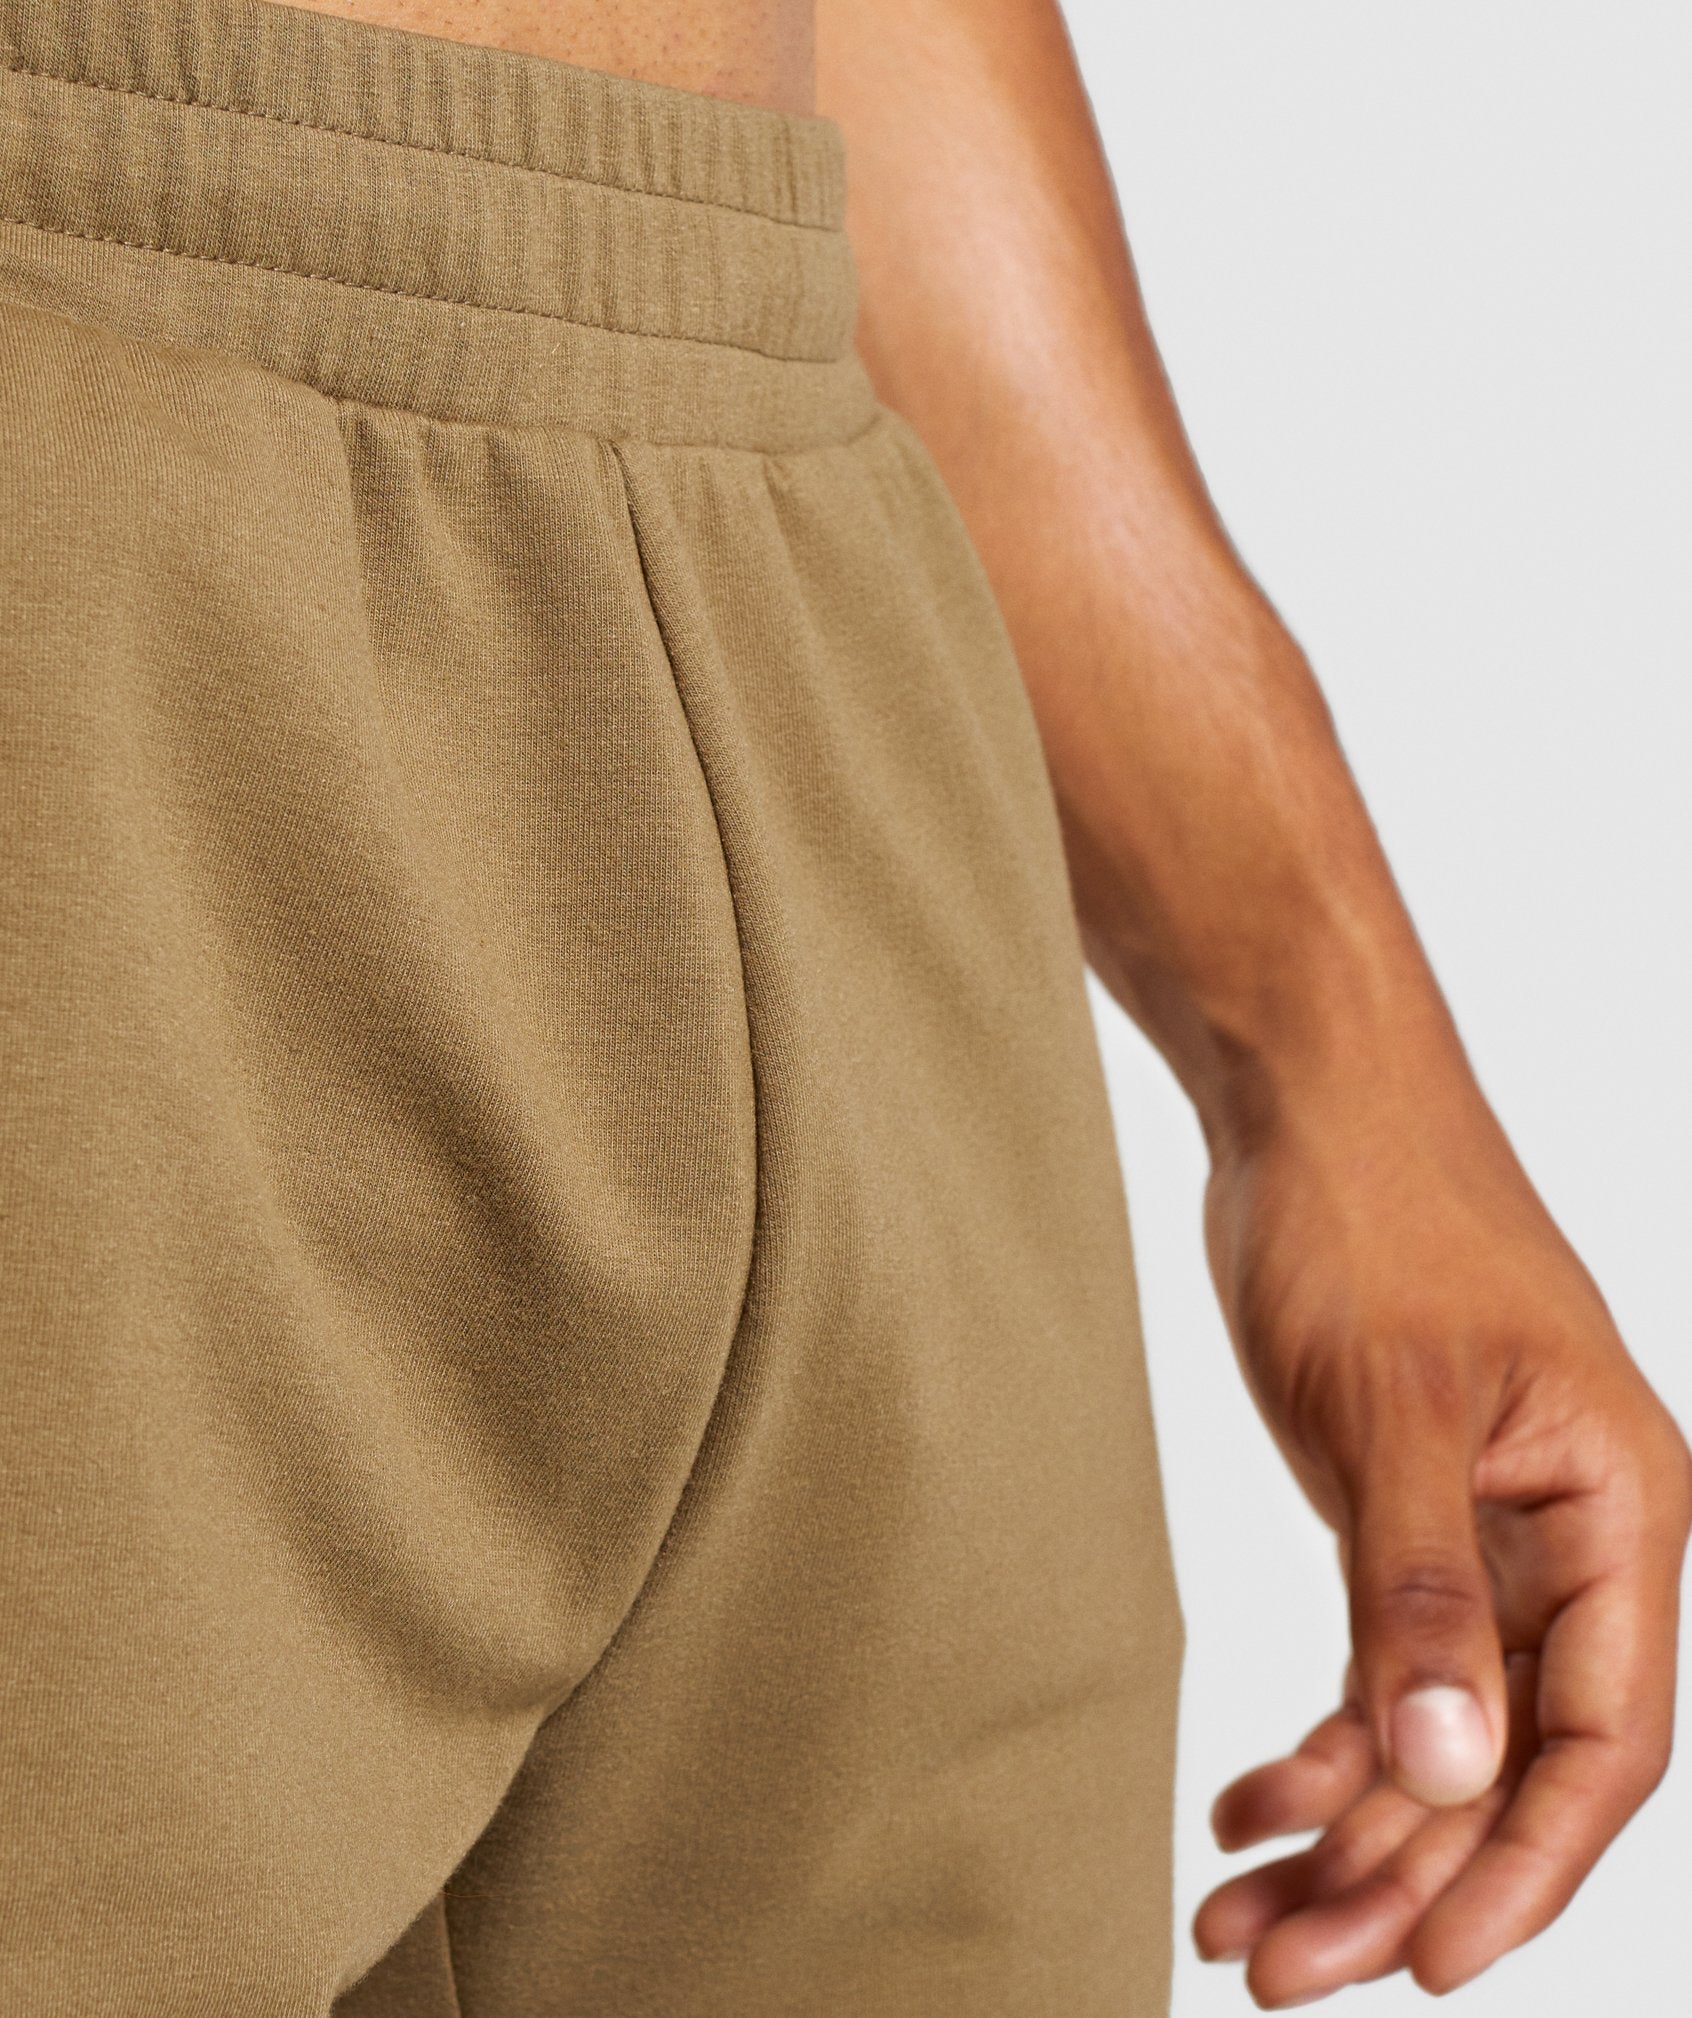 Raw Shorts in Khaki - view 5